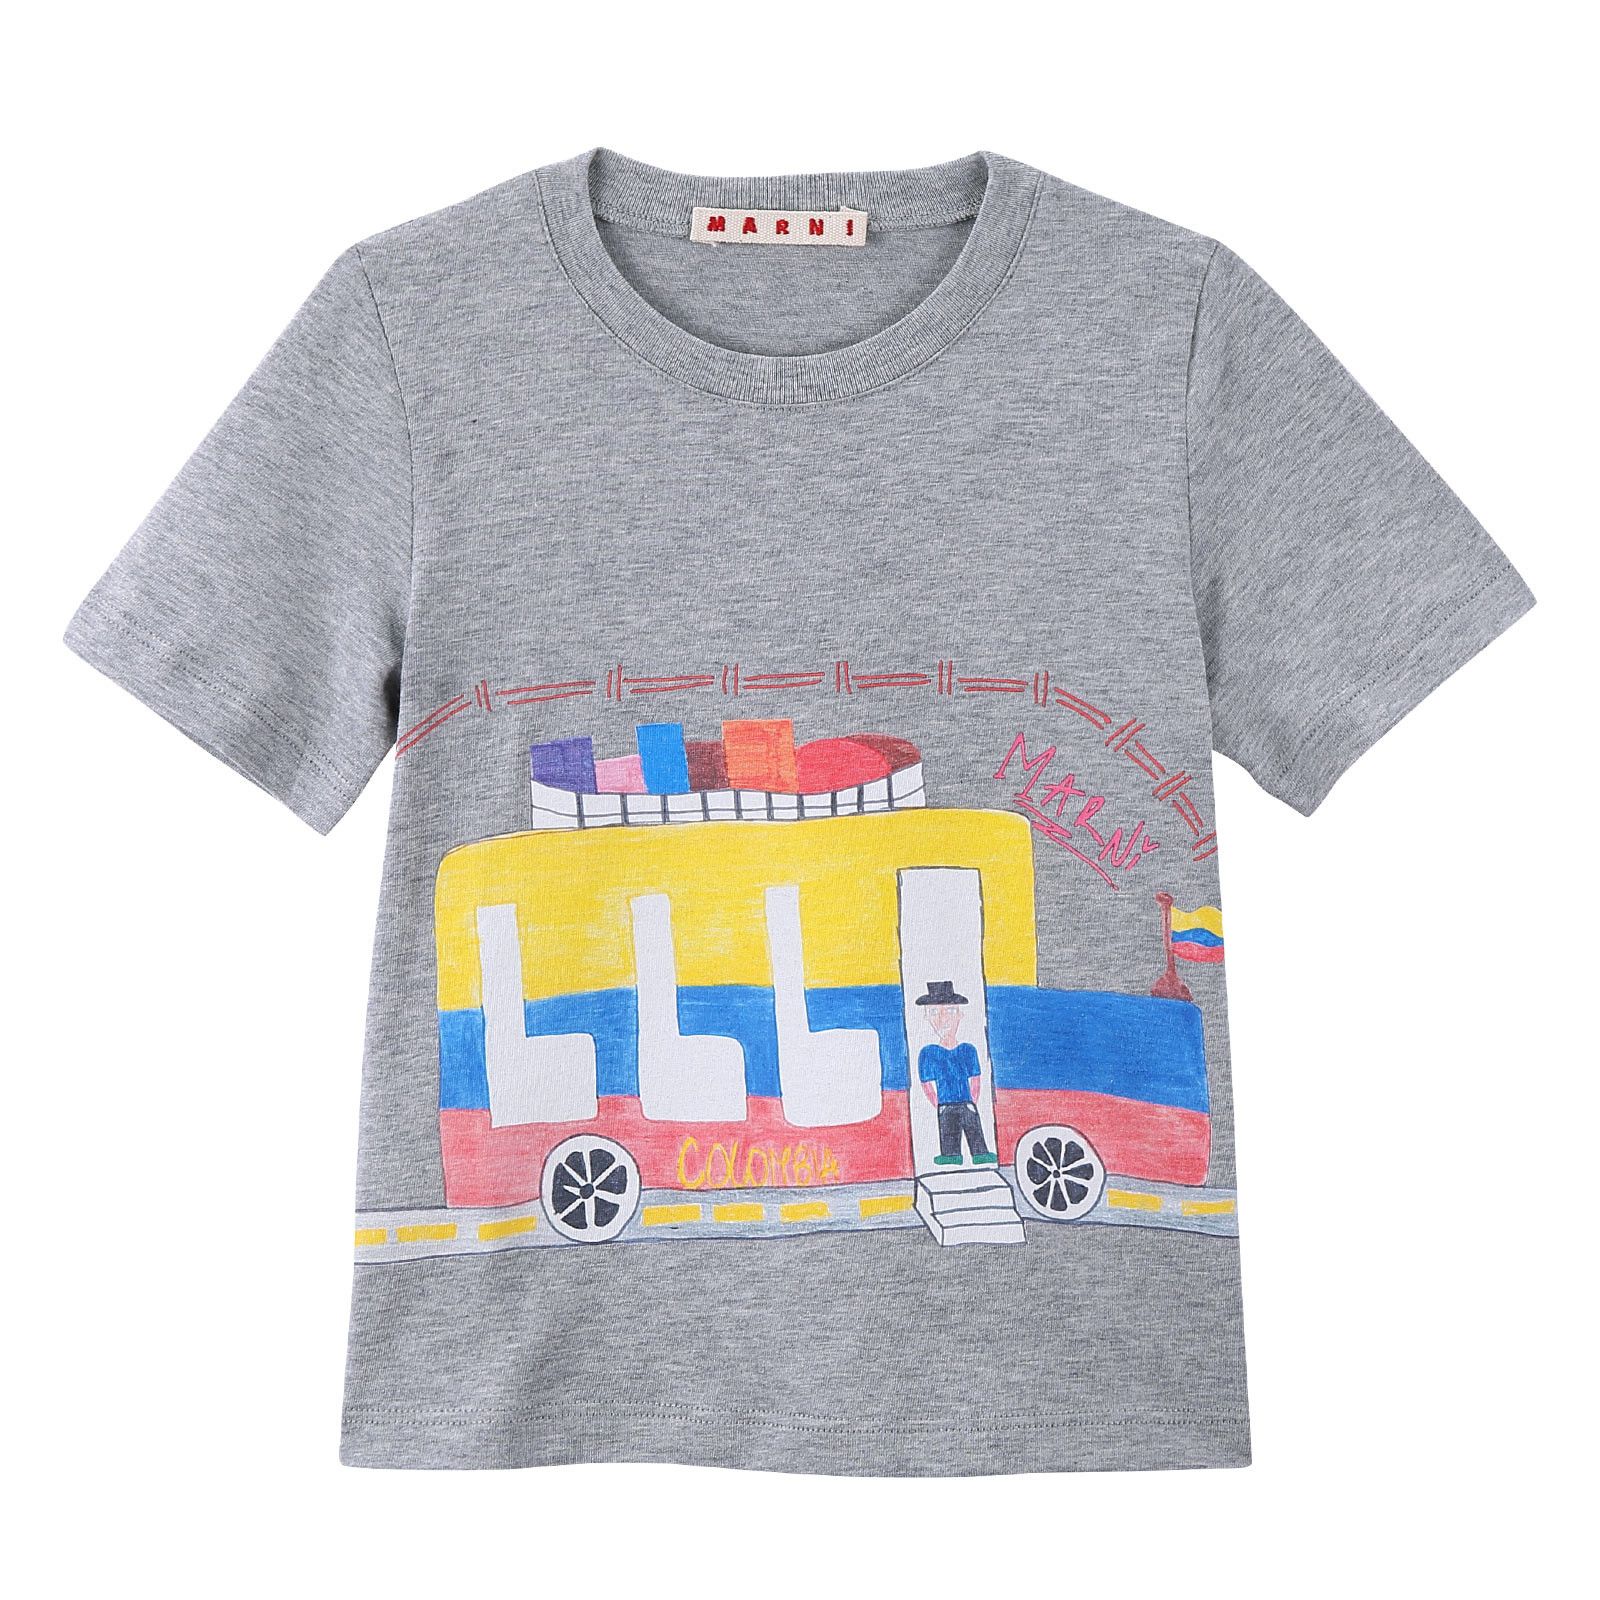 Girls Grey Bus Printed Cotton Jersey T-Shirt - CÉMAROSE | Children's Fashion Store - 1